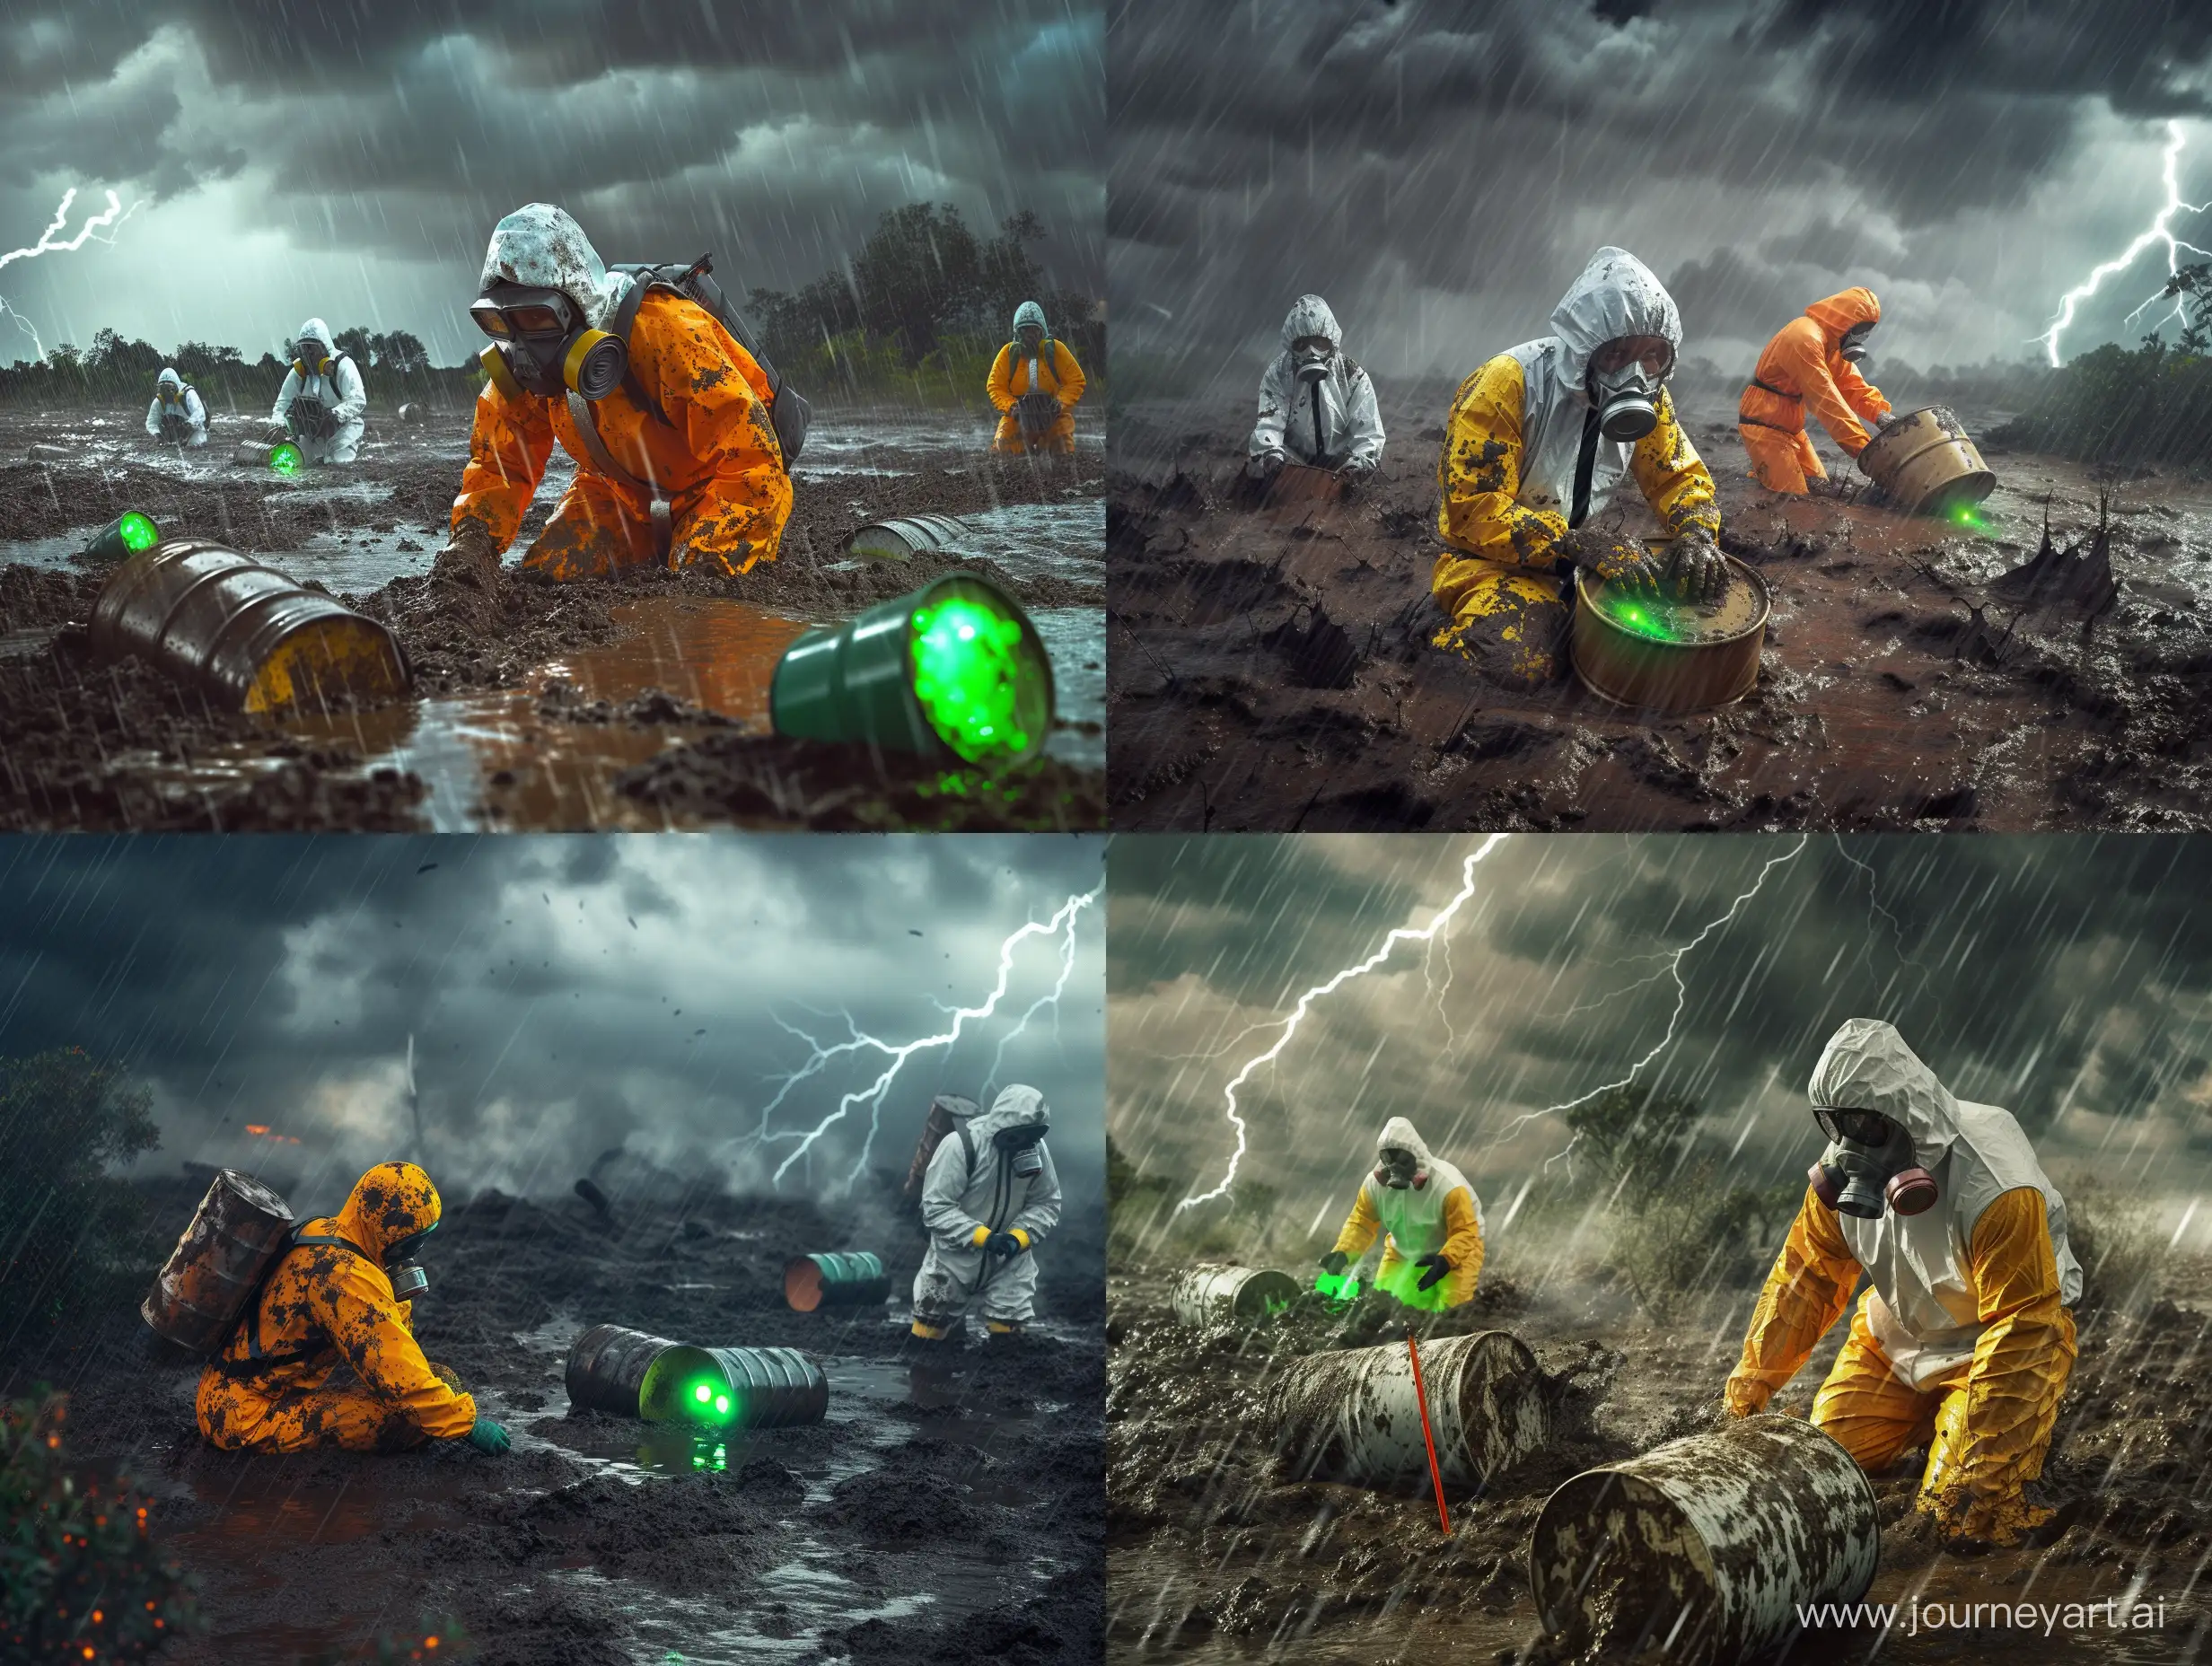 Elite-Biohazard-Trauma-Team-in-Hazmat-Suits-Amidst-Toxic-Rainstorm